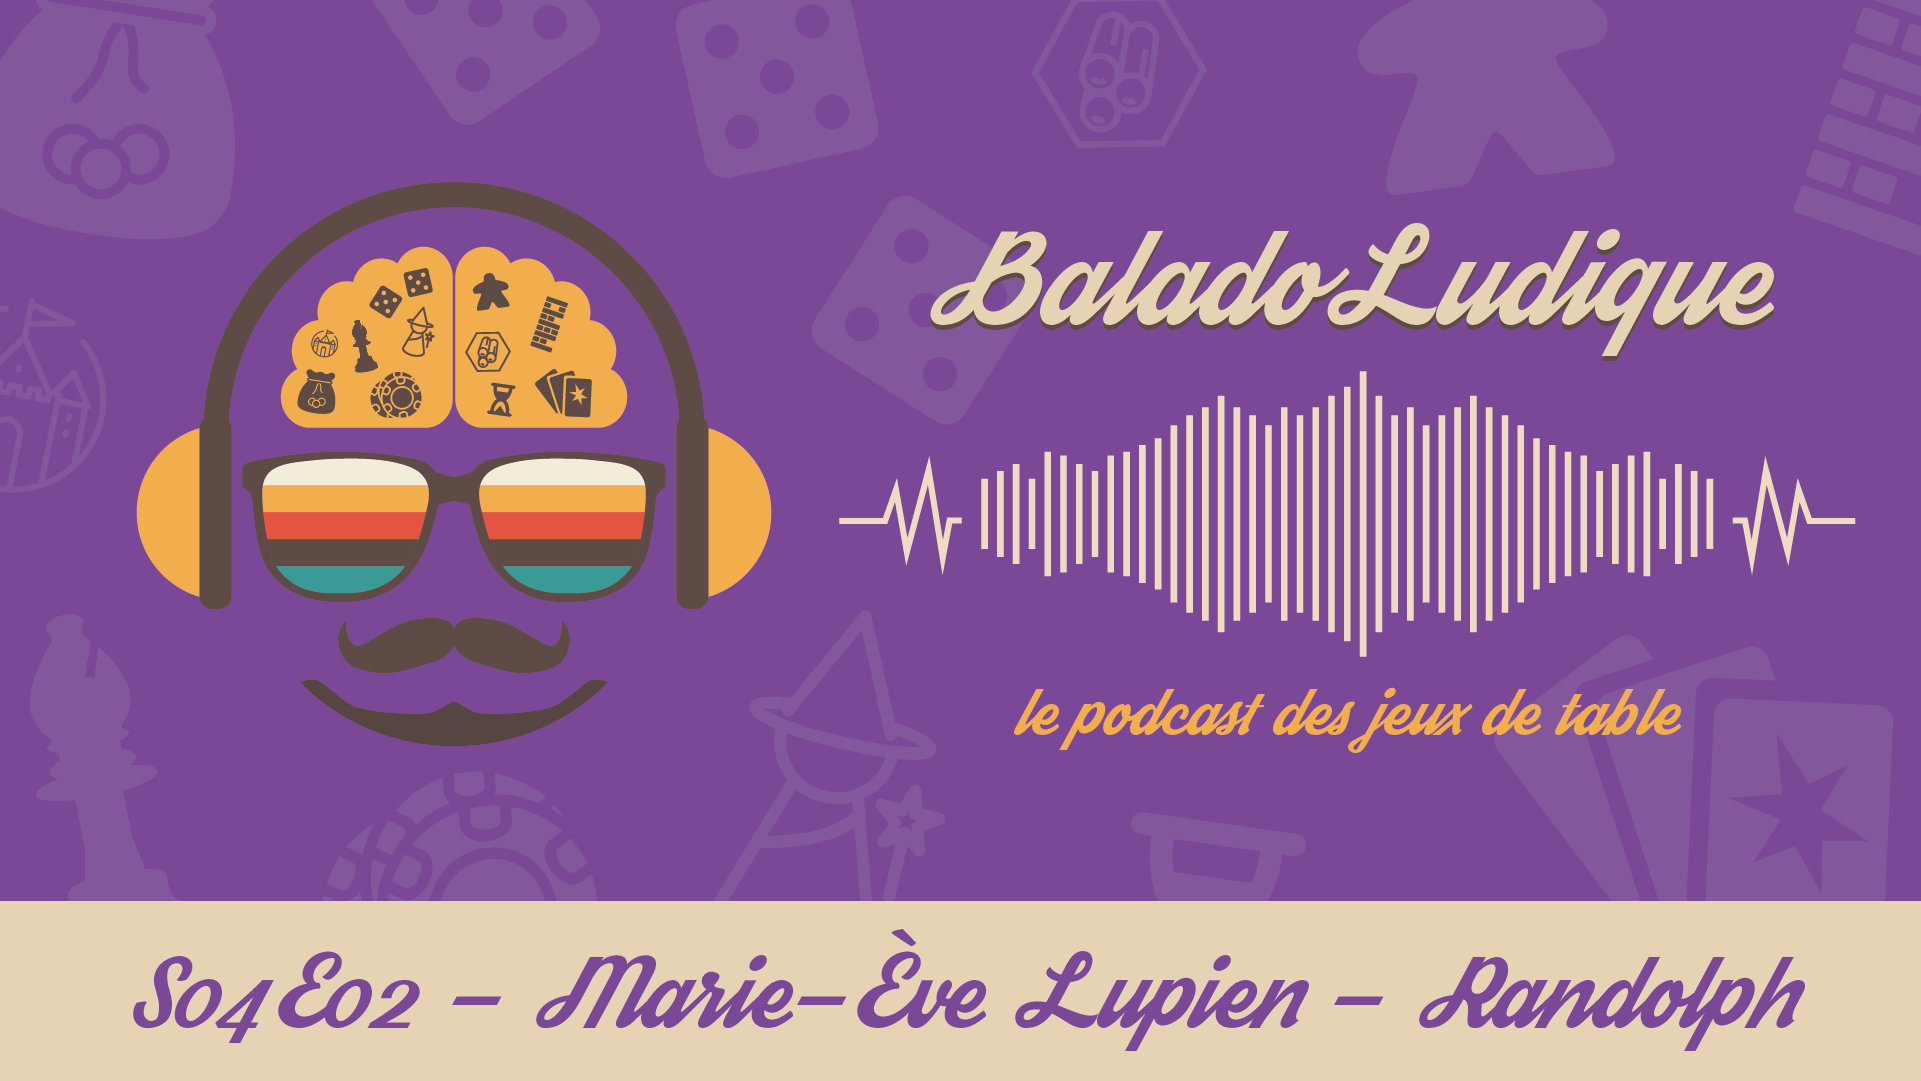 Marie-Ève Lupien - BaladoLudique - s04-e02